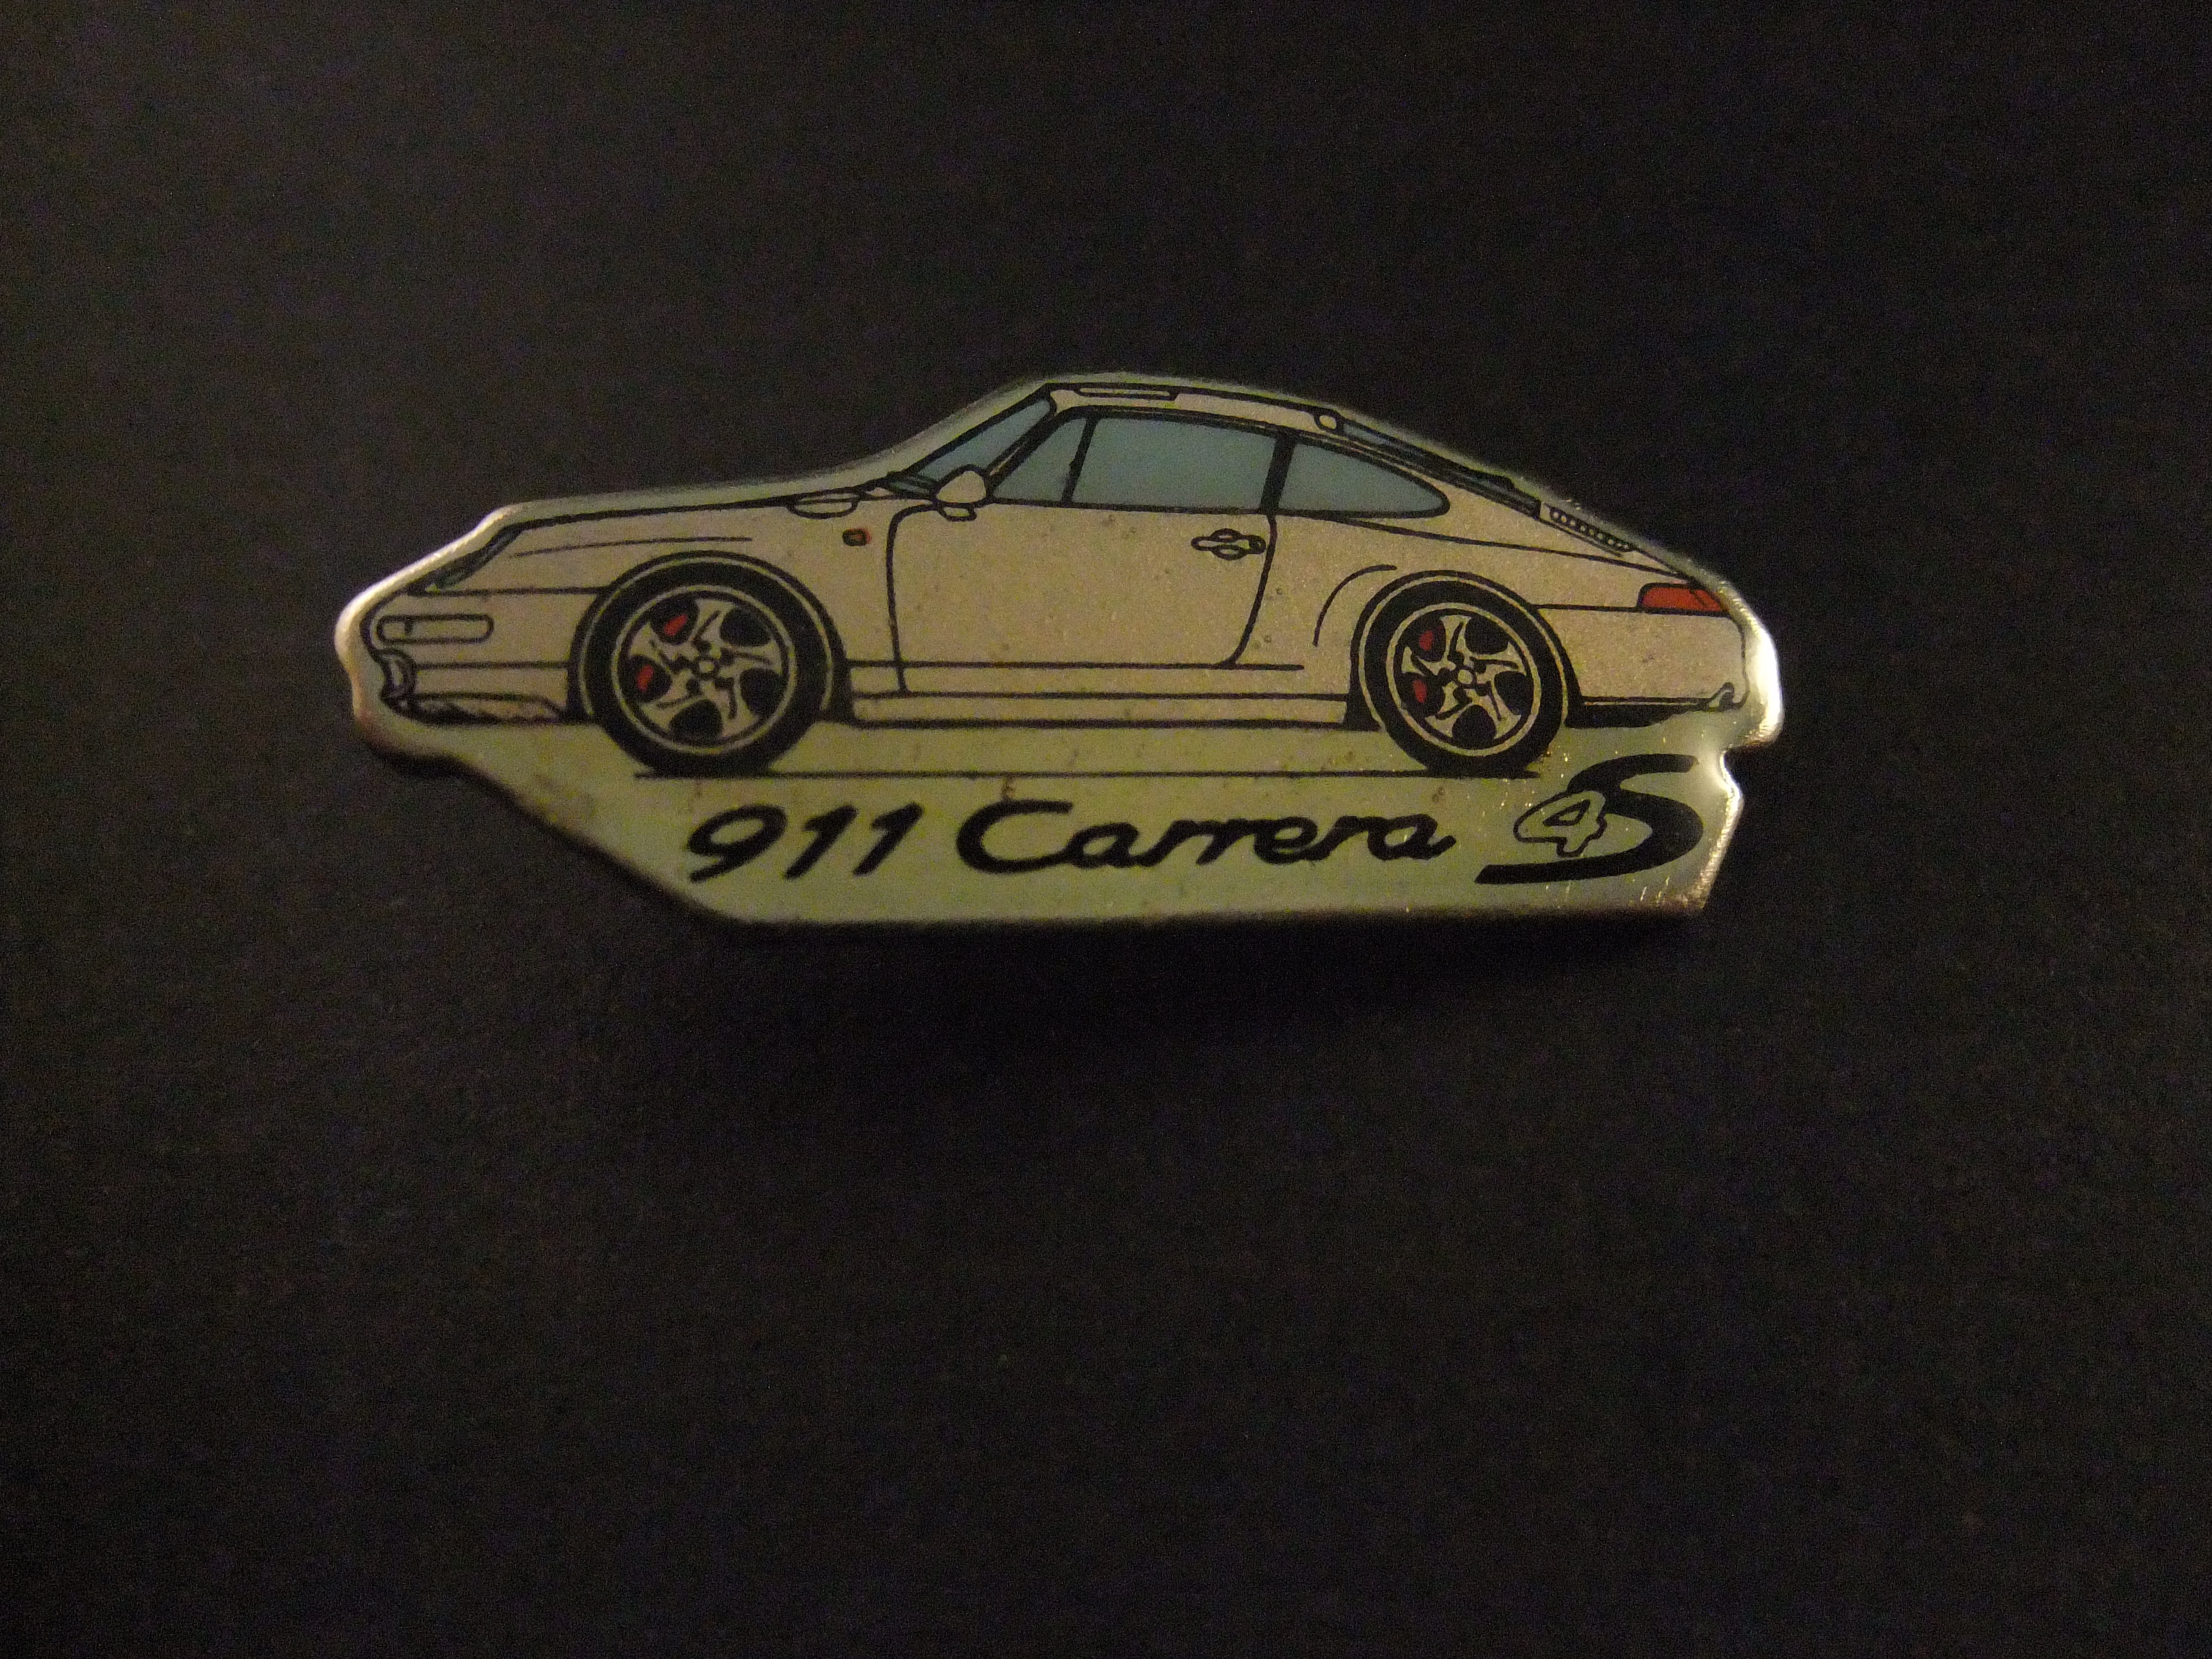 Porsche 911 Carrera 4S sportwagen